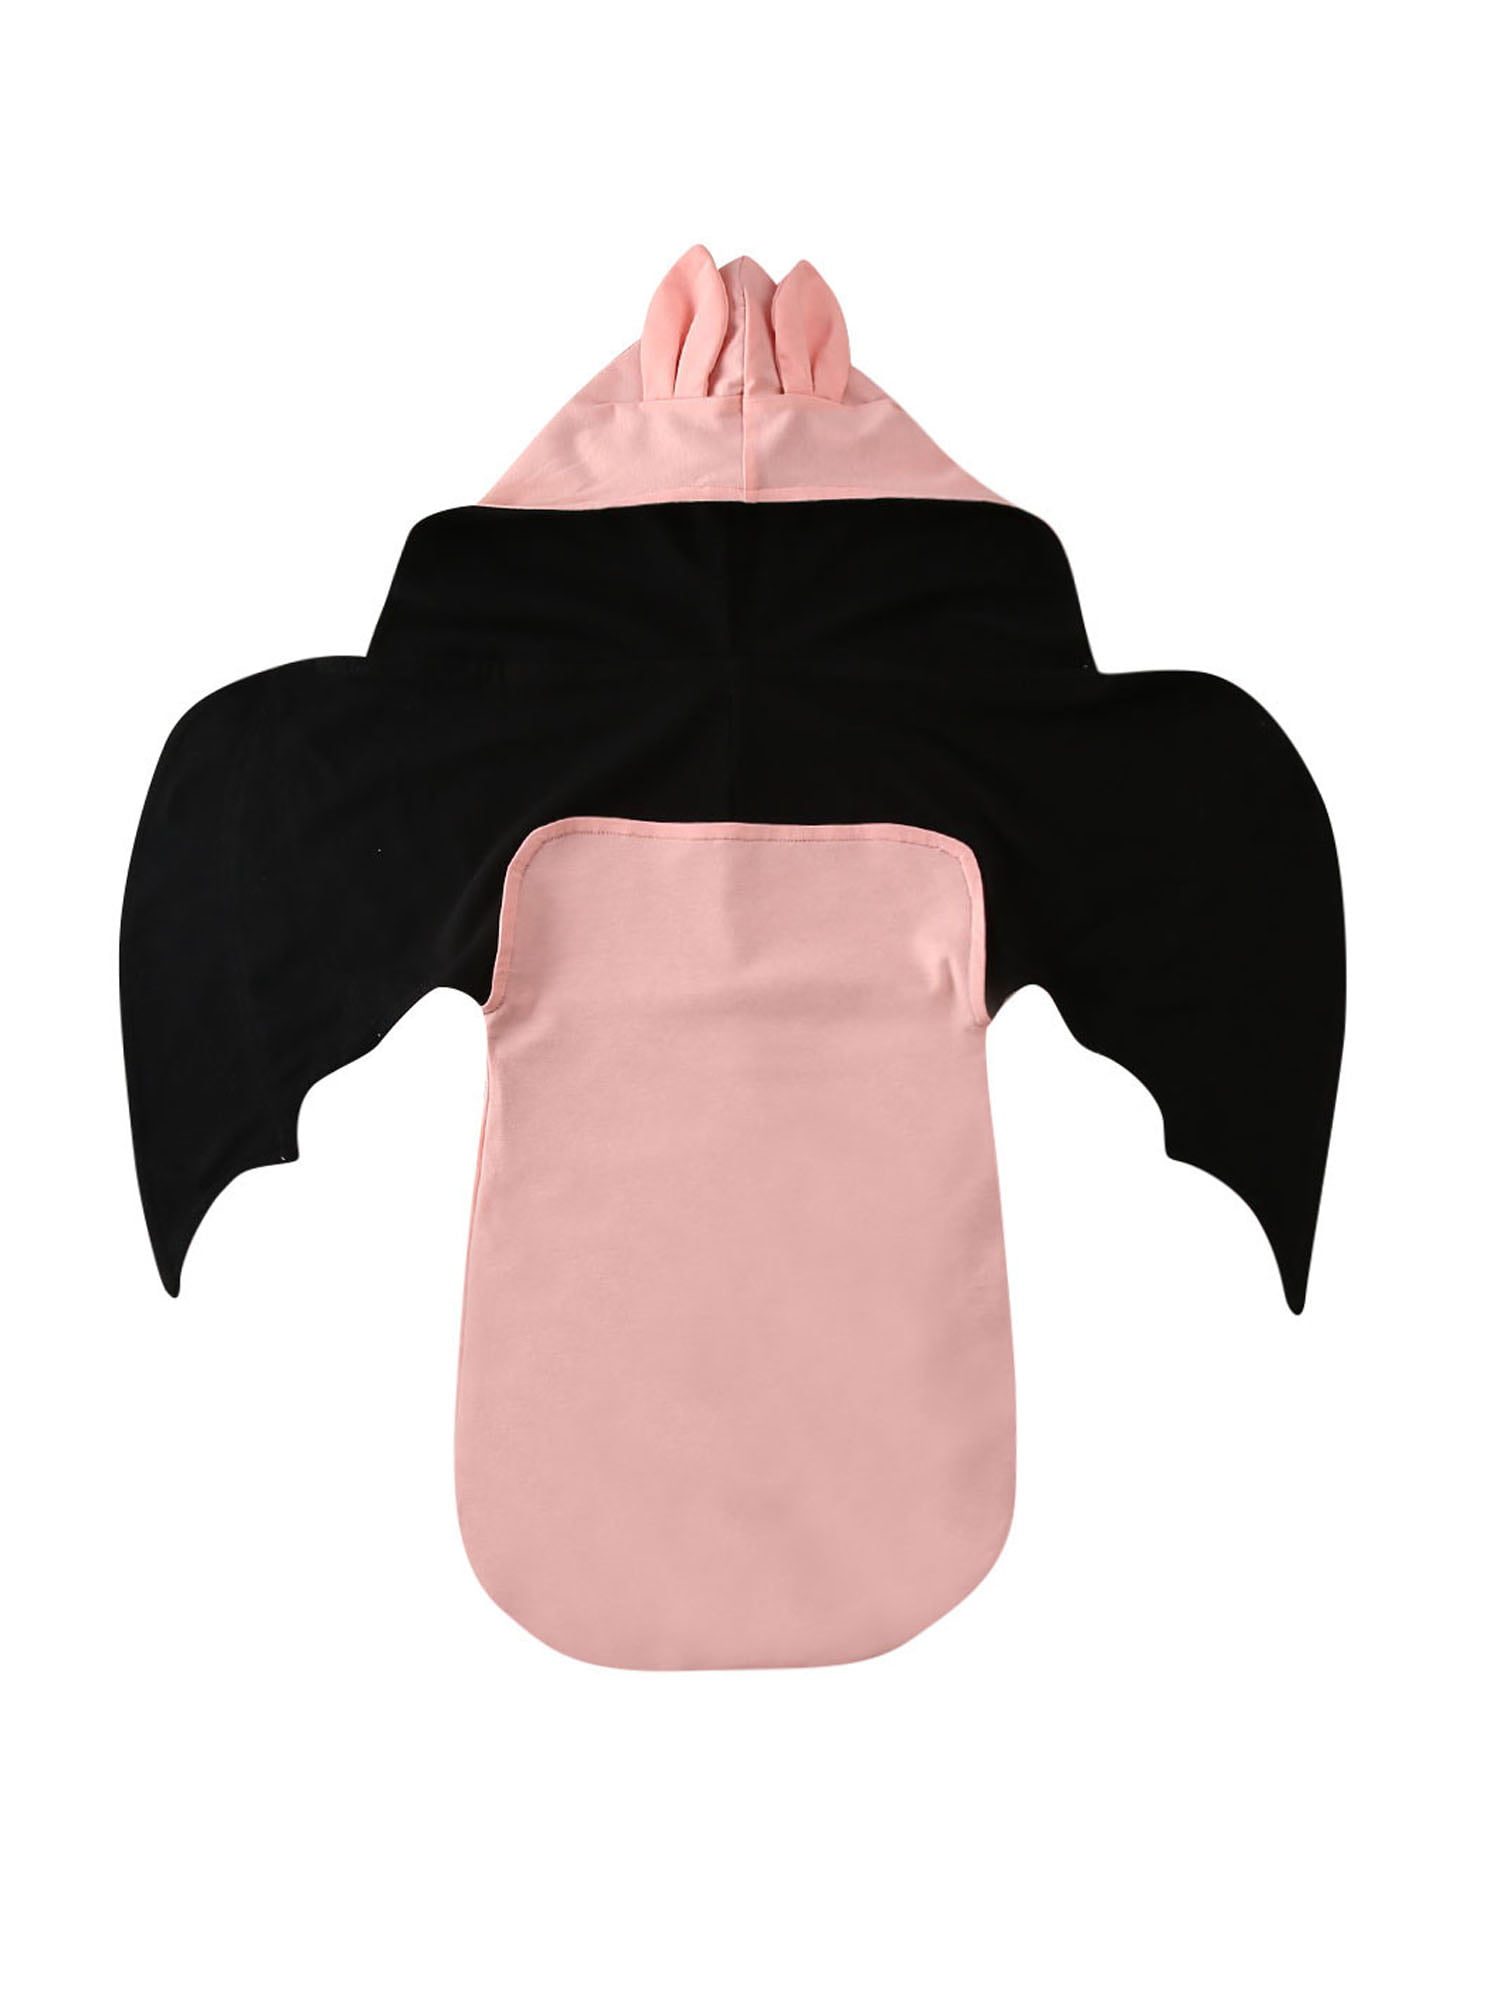 0-12 Month Newborn Baby Swaddle Blankets Bat Romper Hooded Sleeping Bag for Girls Boys Kids